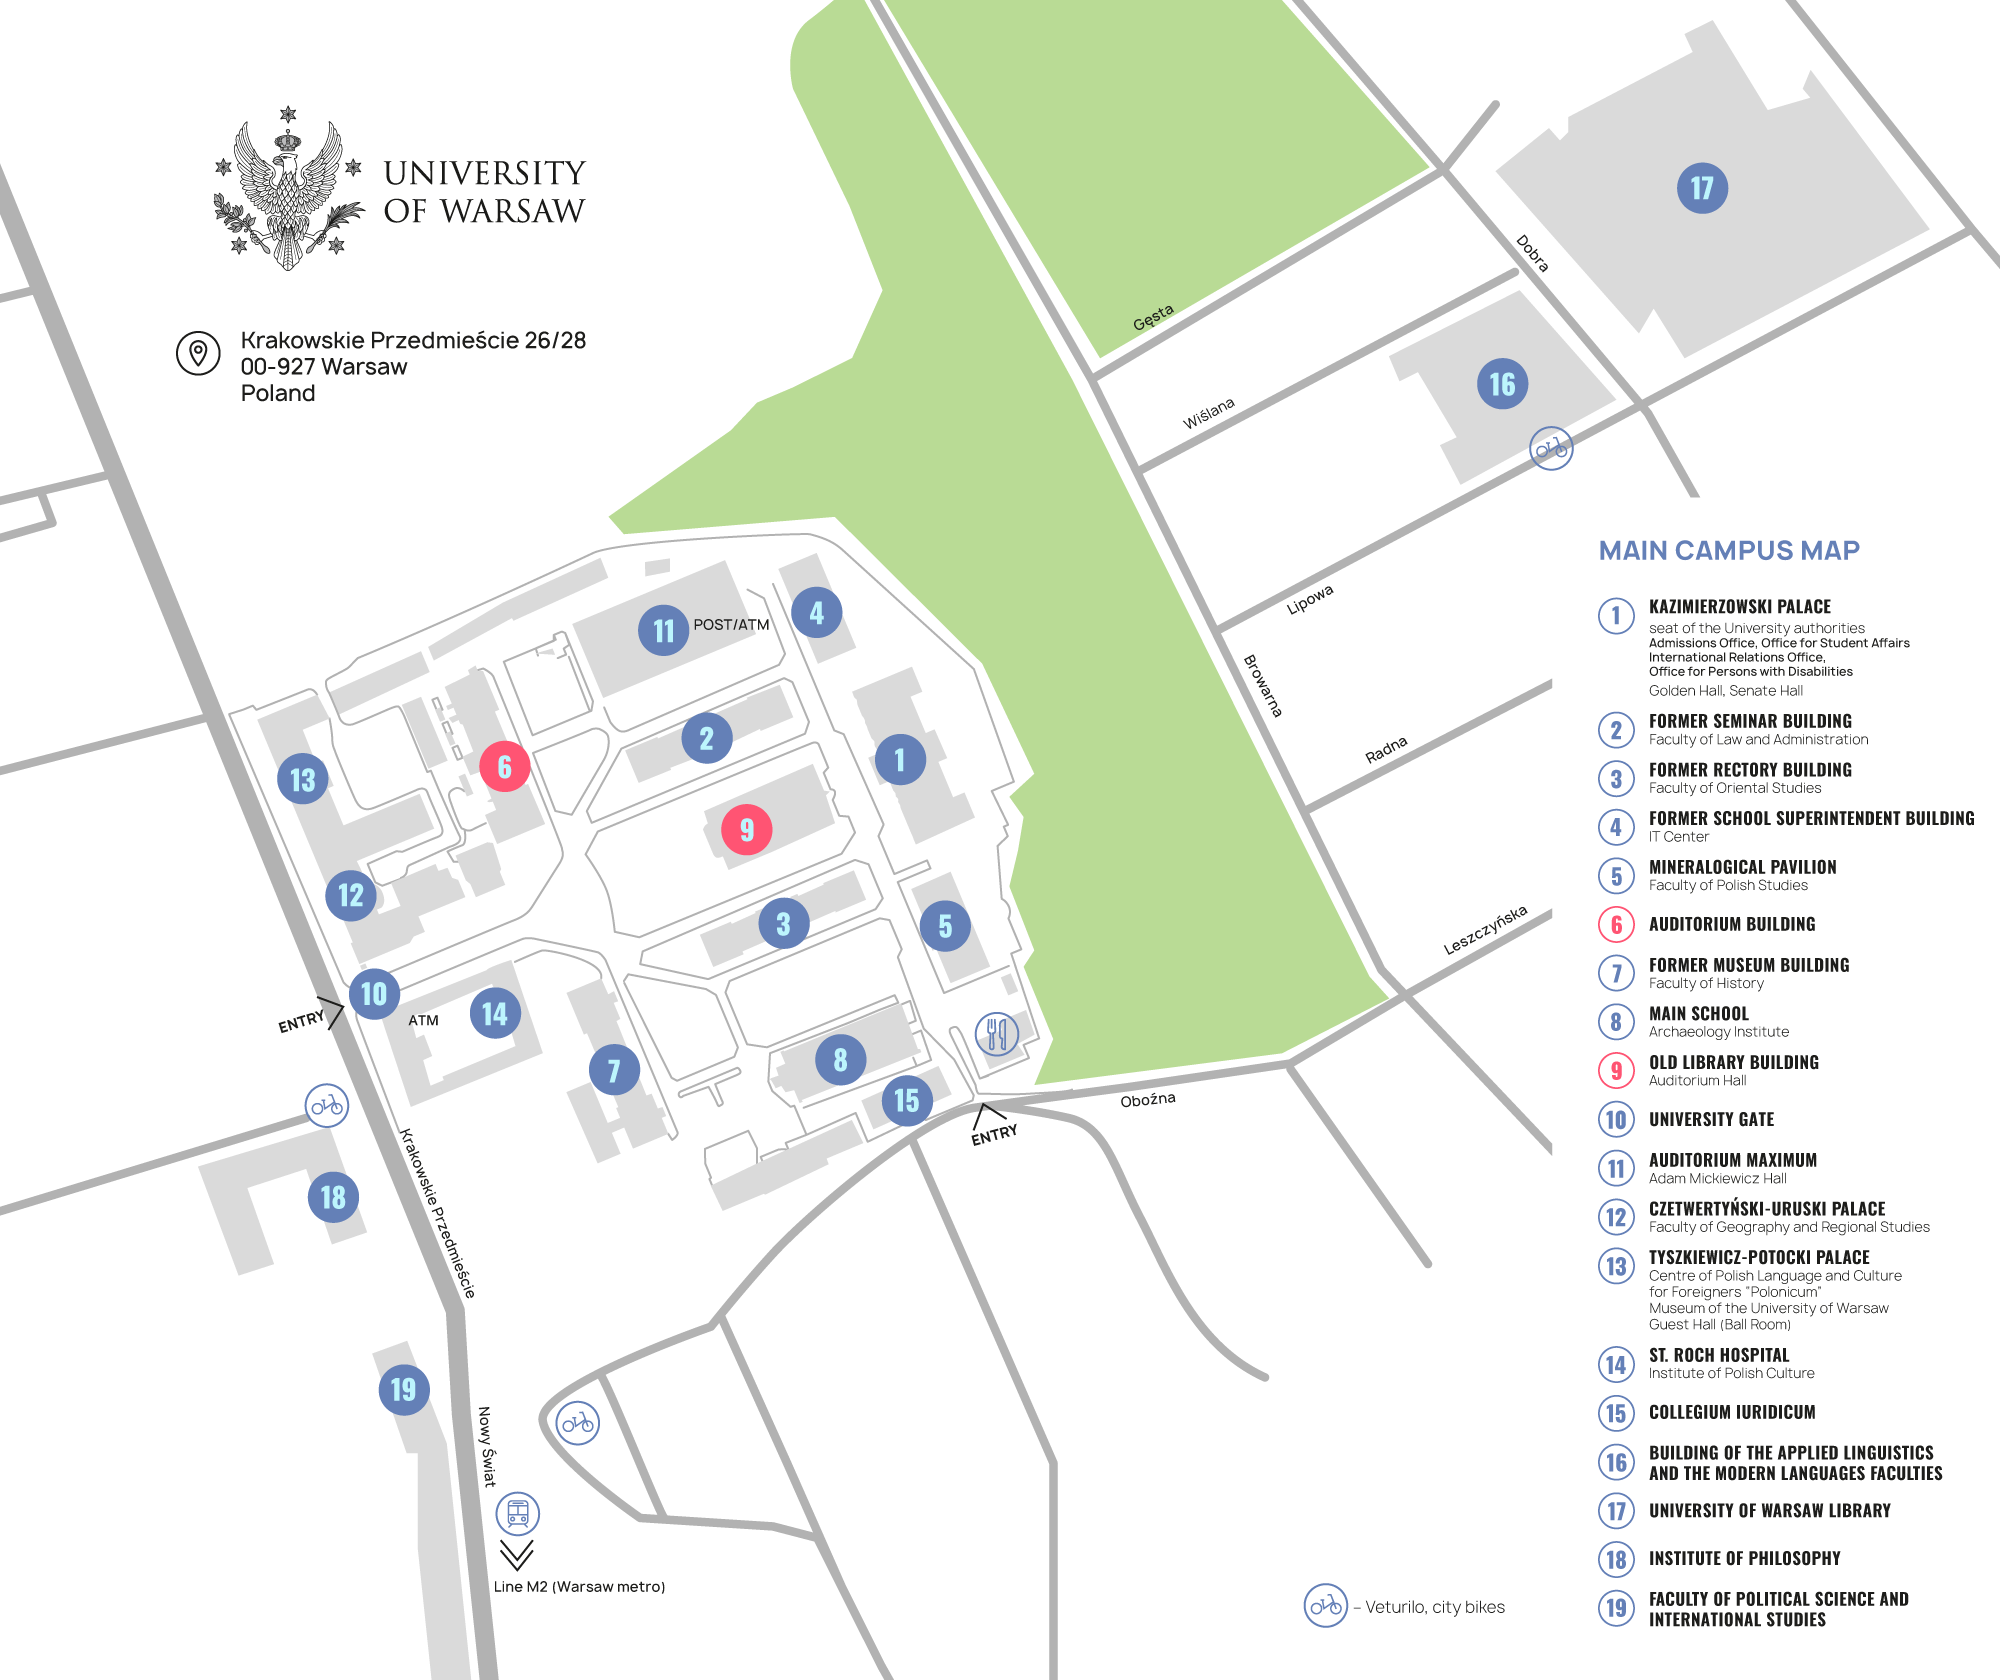 University of Warsaw Main Campus Map